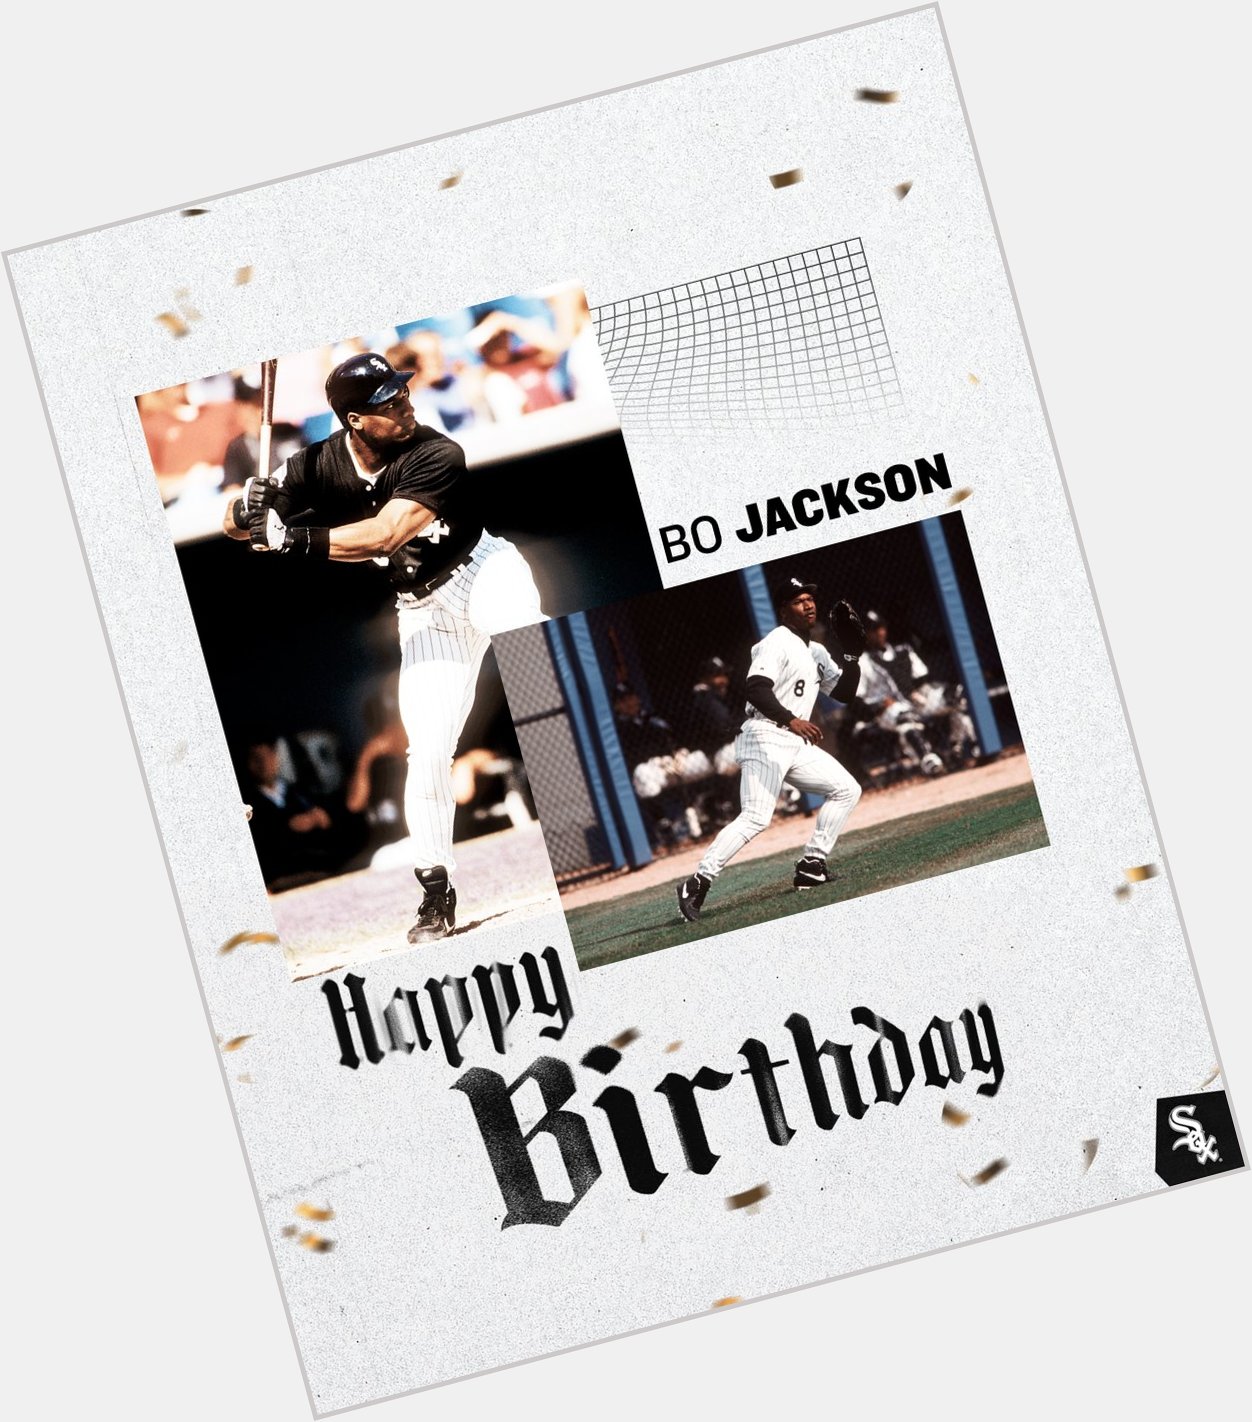 Happy birthday, Bo Jackson! 